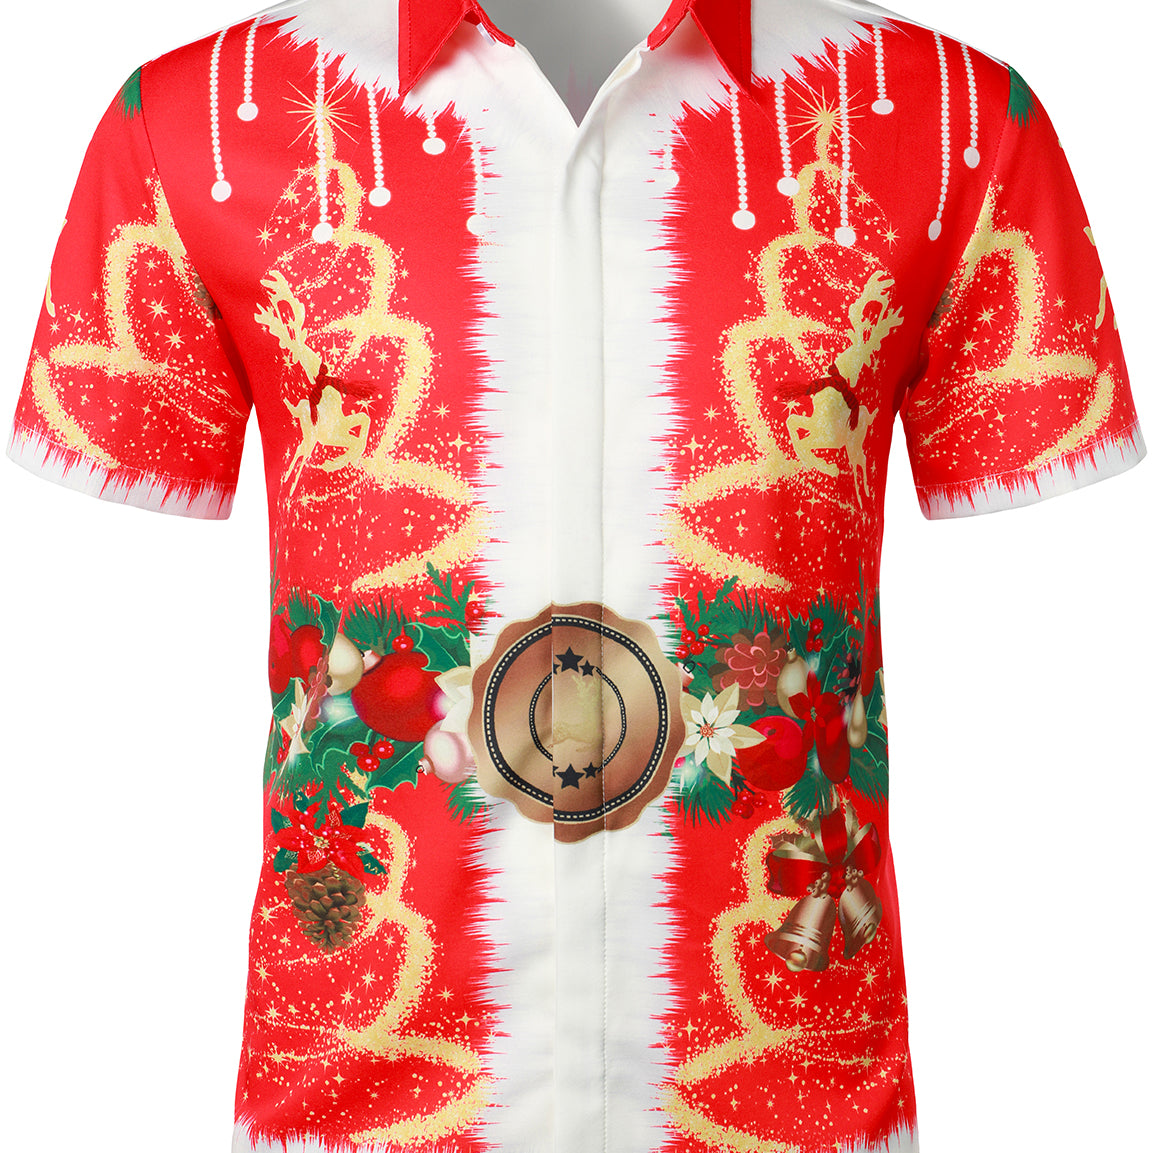 Men's Vintage Christmas Themed Costume Red Funny Lapel Short Sleeve Shirt